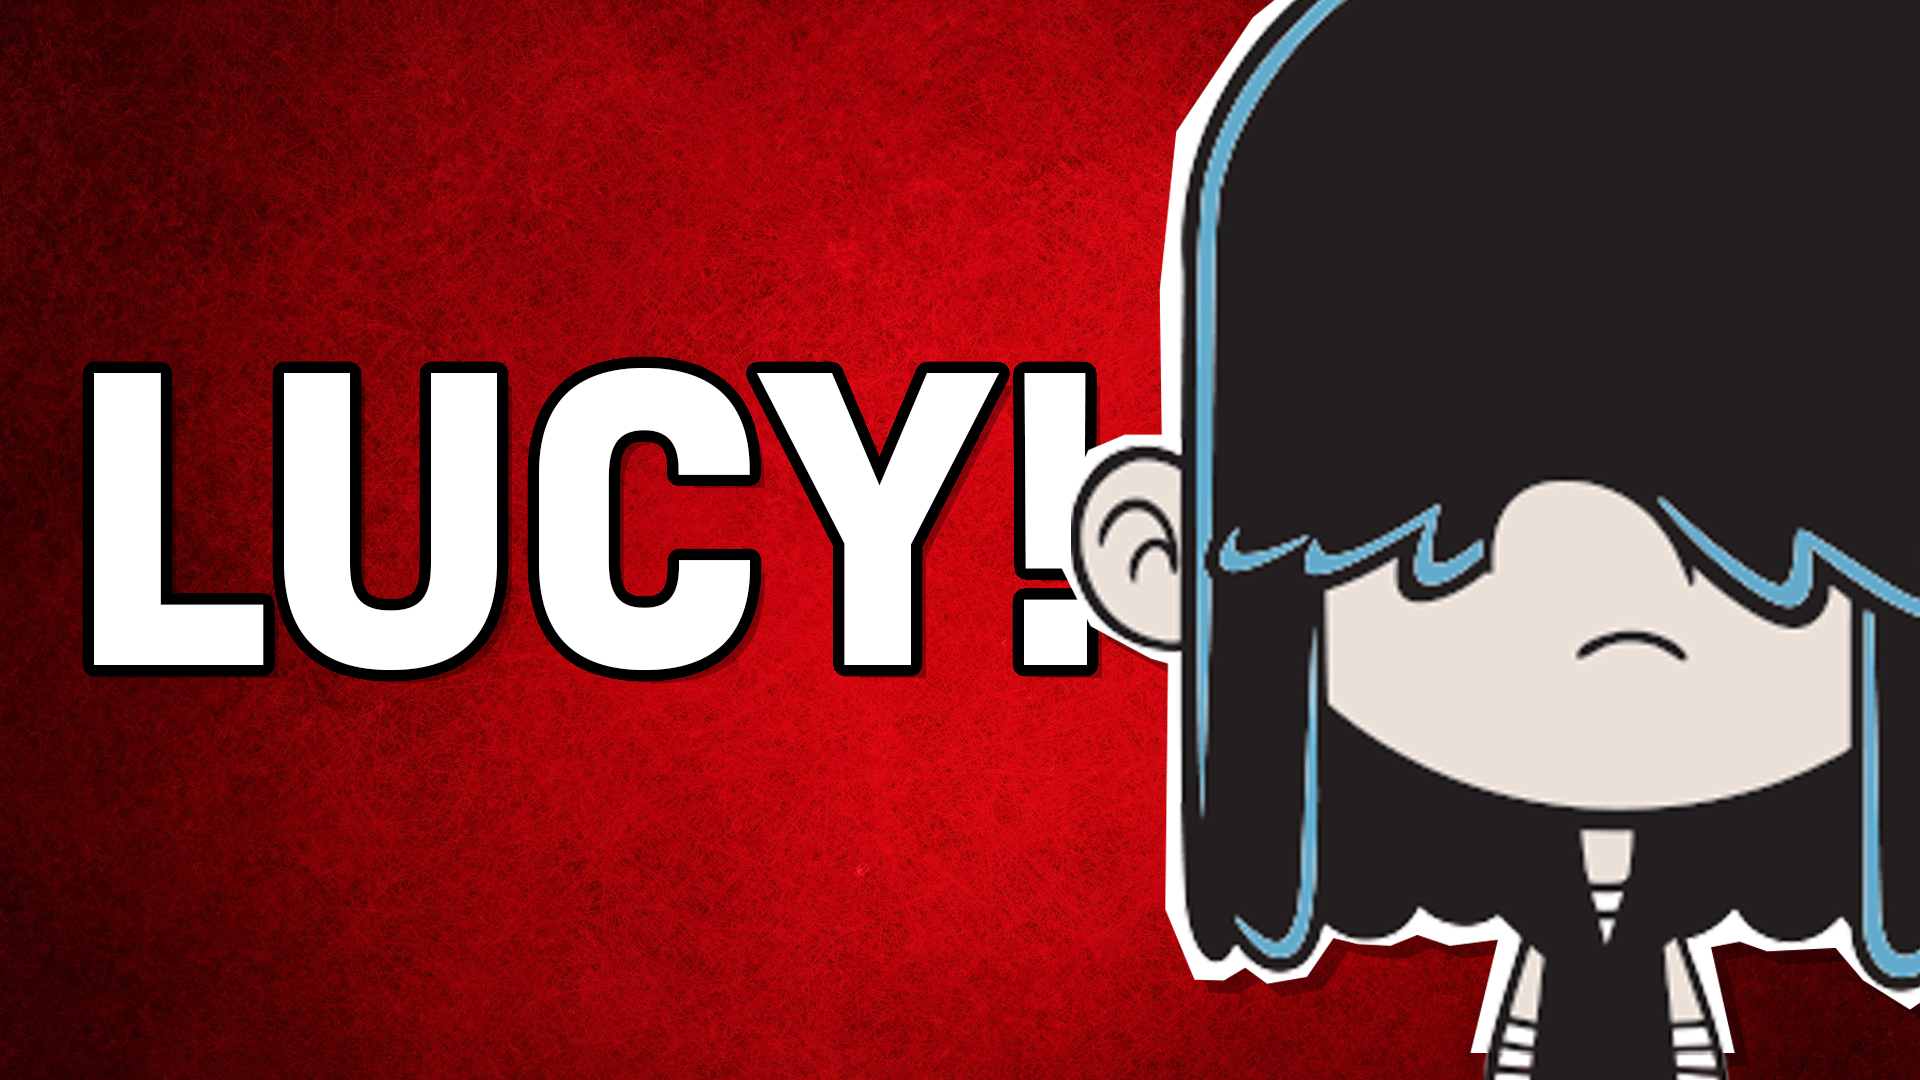 Lucy Loud